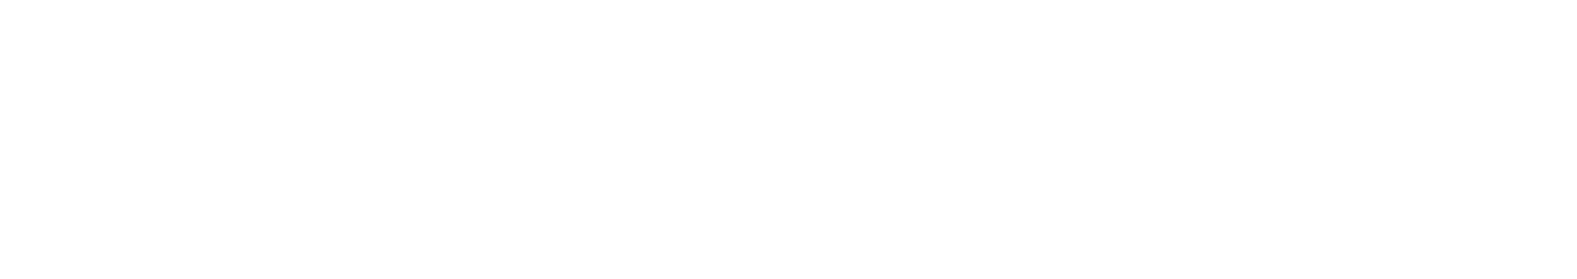 Microvast logo large for dark backgrounds (transparent PNG)